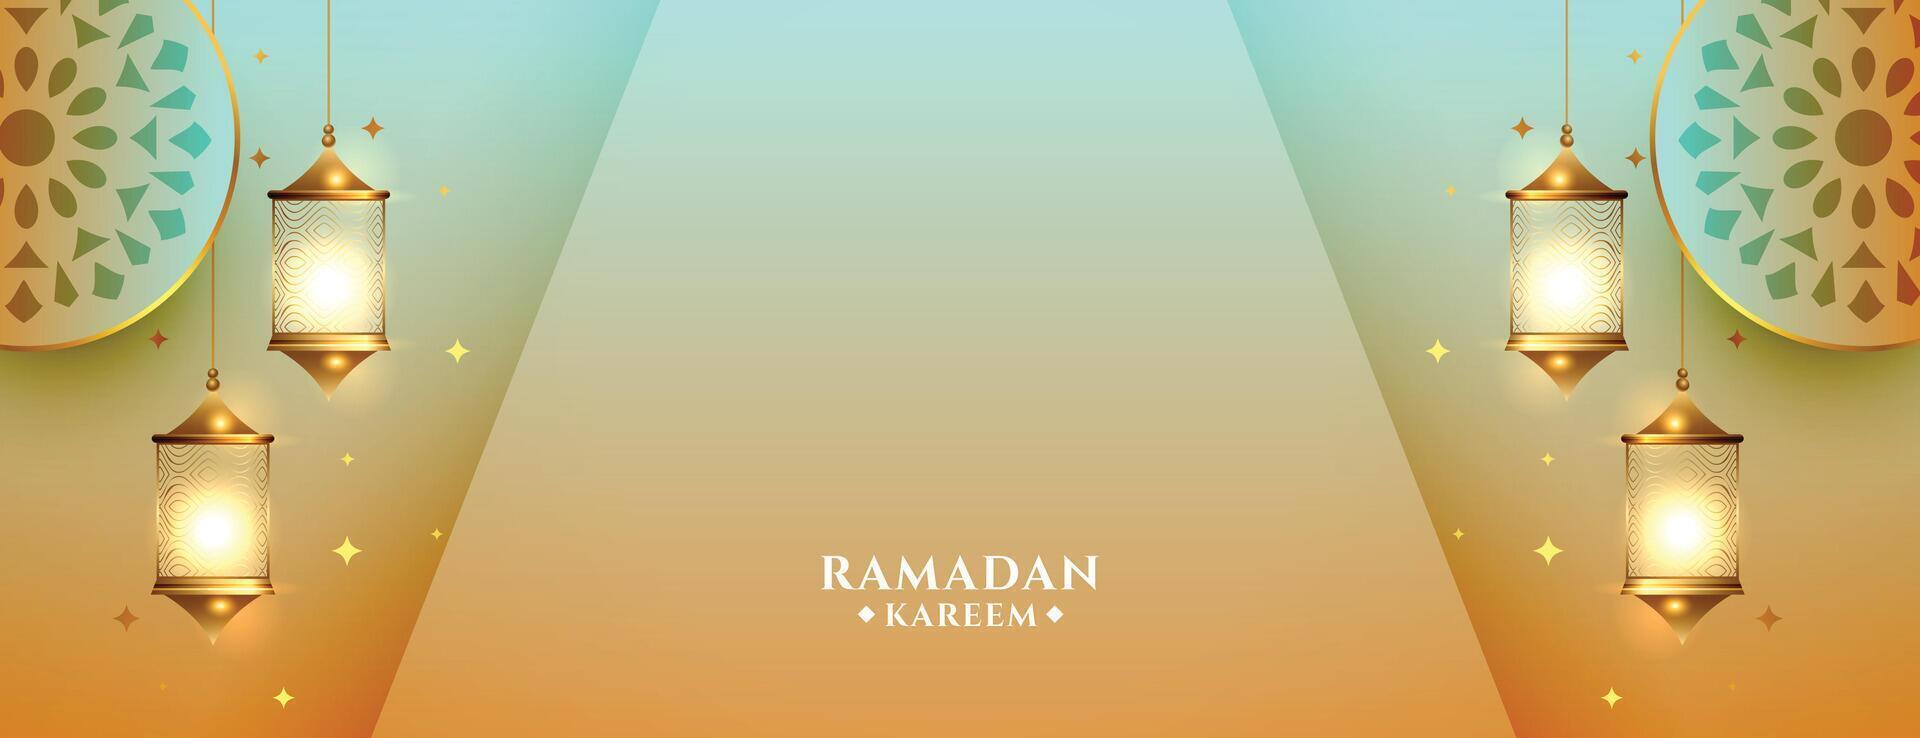 arabe islamique style Ramadan kareem eid mubarak bannière vecteur